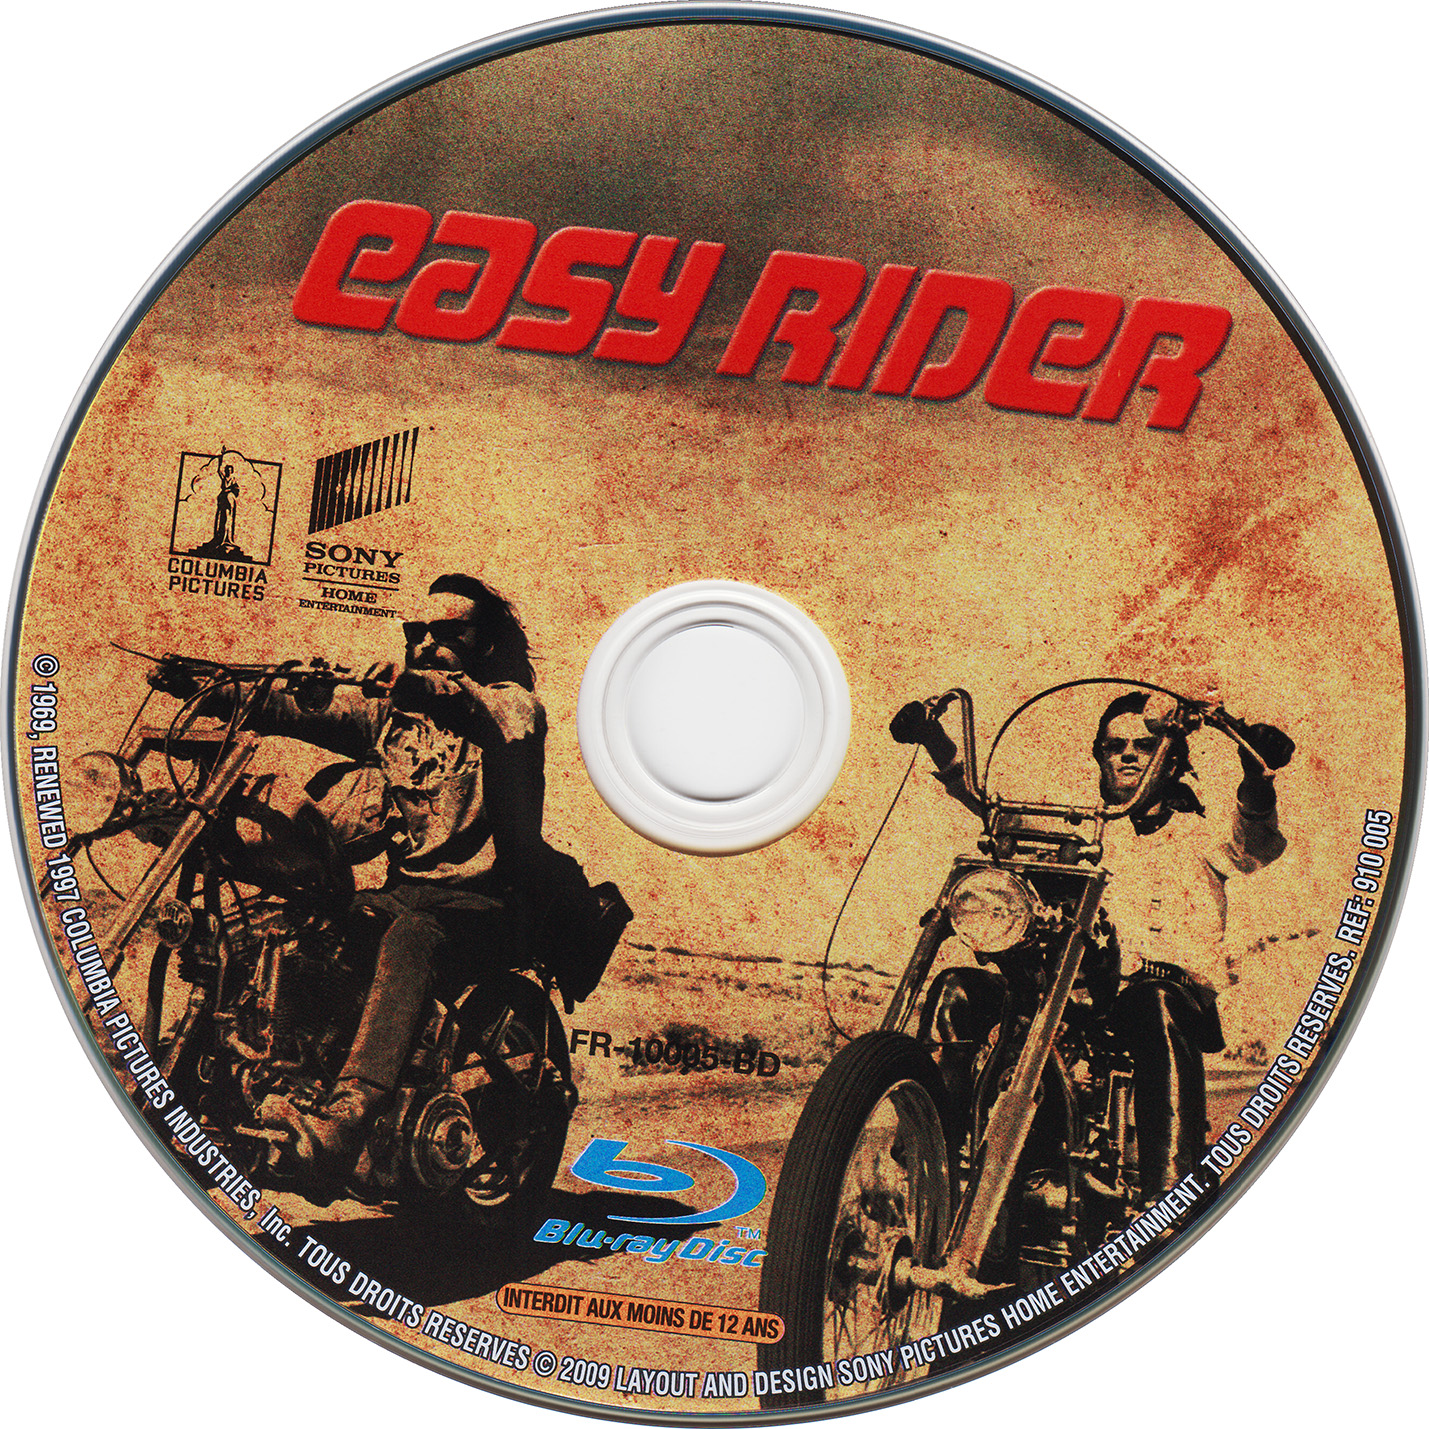 Easy rider (BLU-RAY)